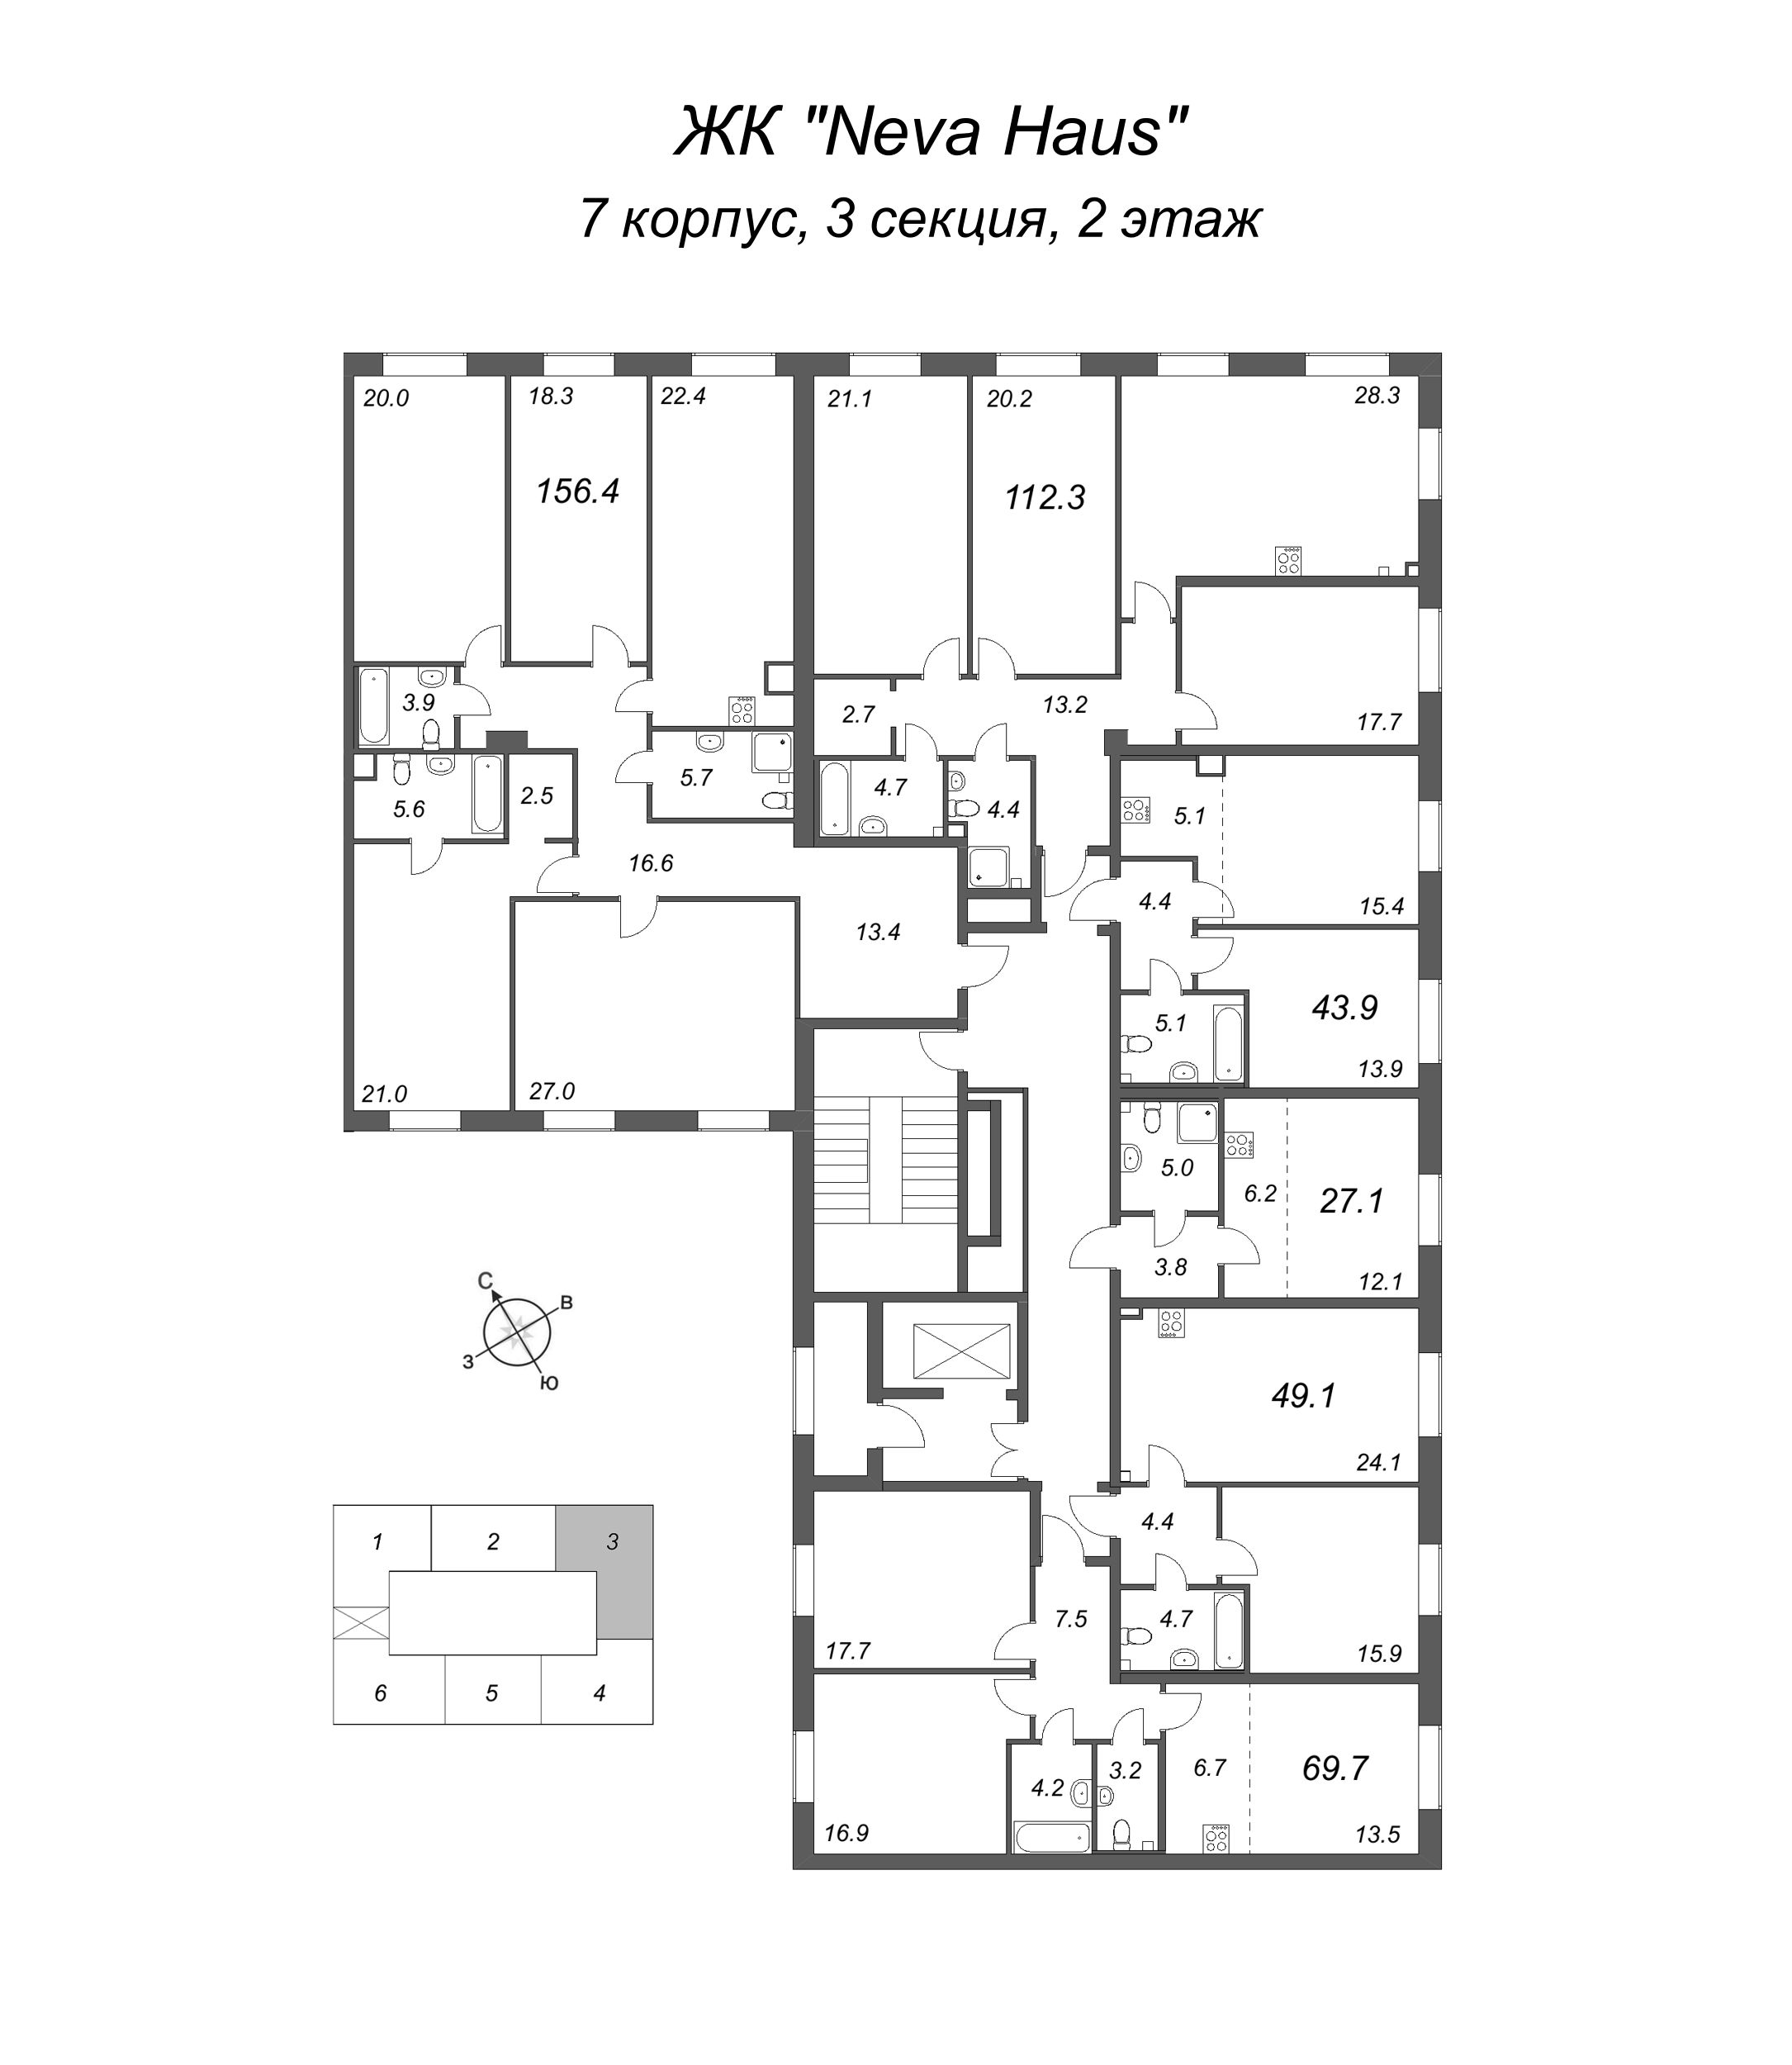 4-комнатная (Евро) квартира, 113.2 м² - планировка этажа